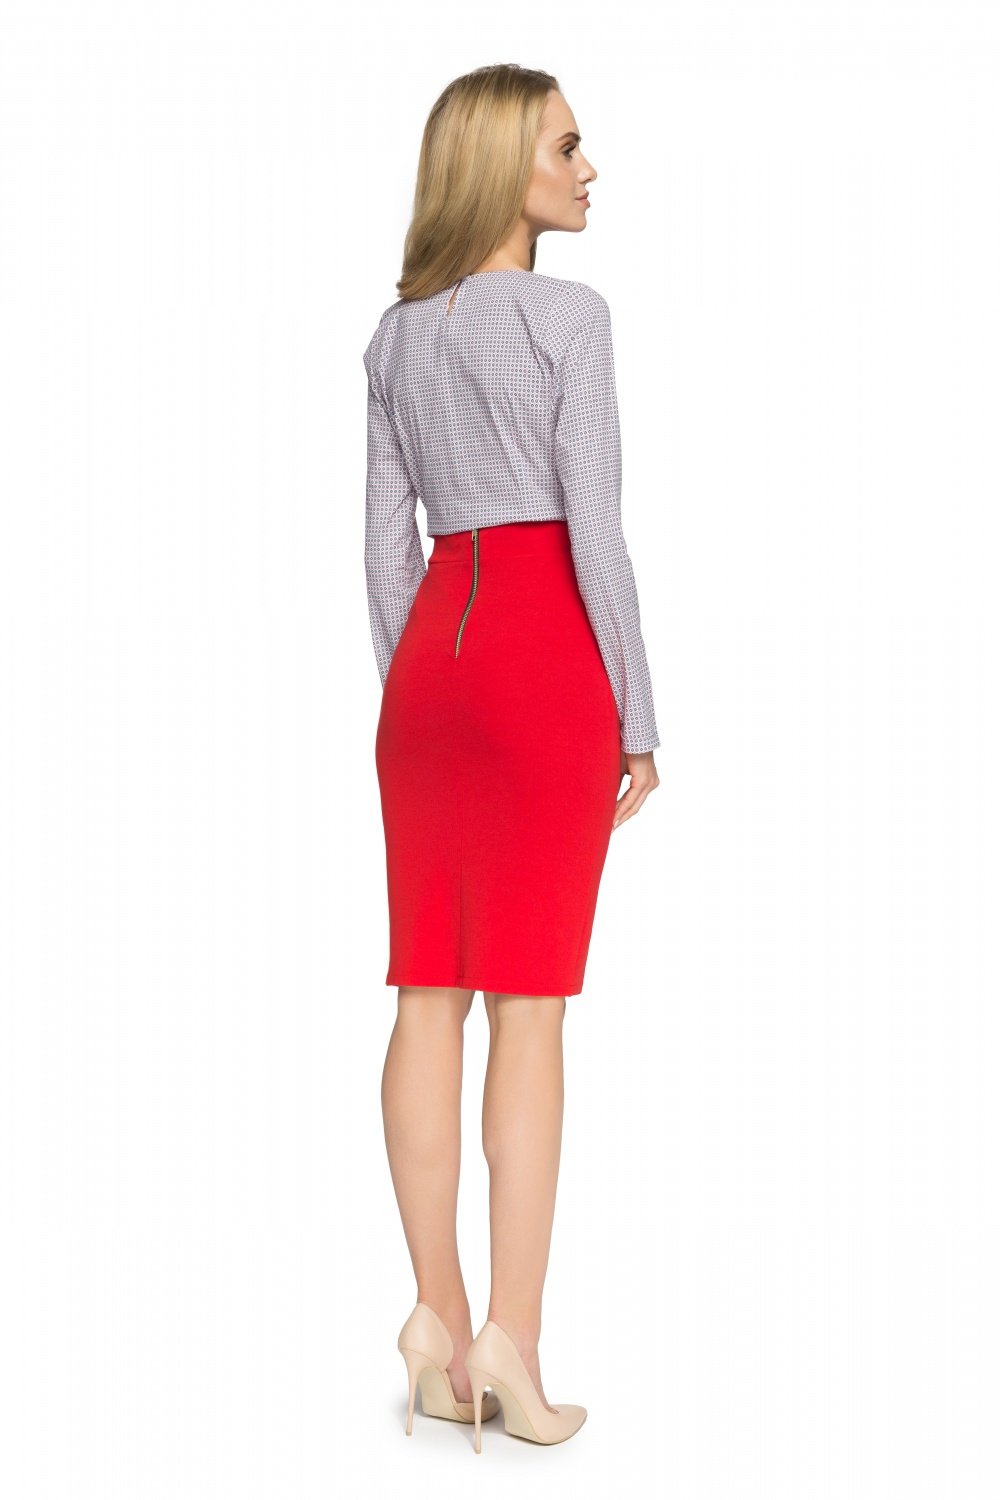 Skirt model 112832 Stylove Posh Styles Apparel